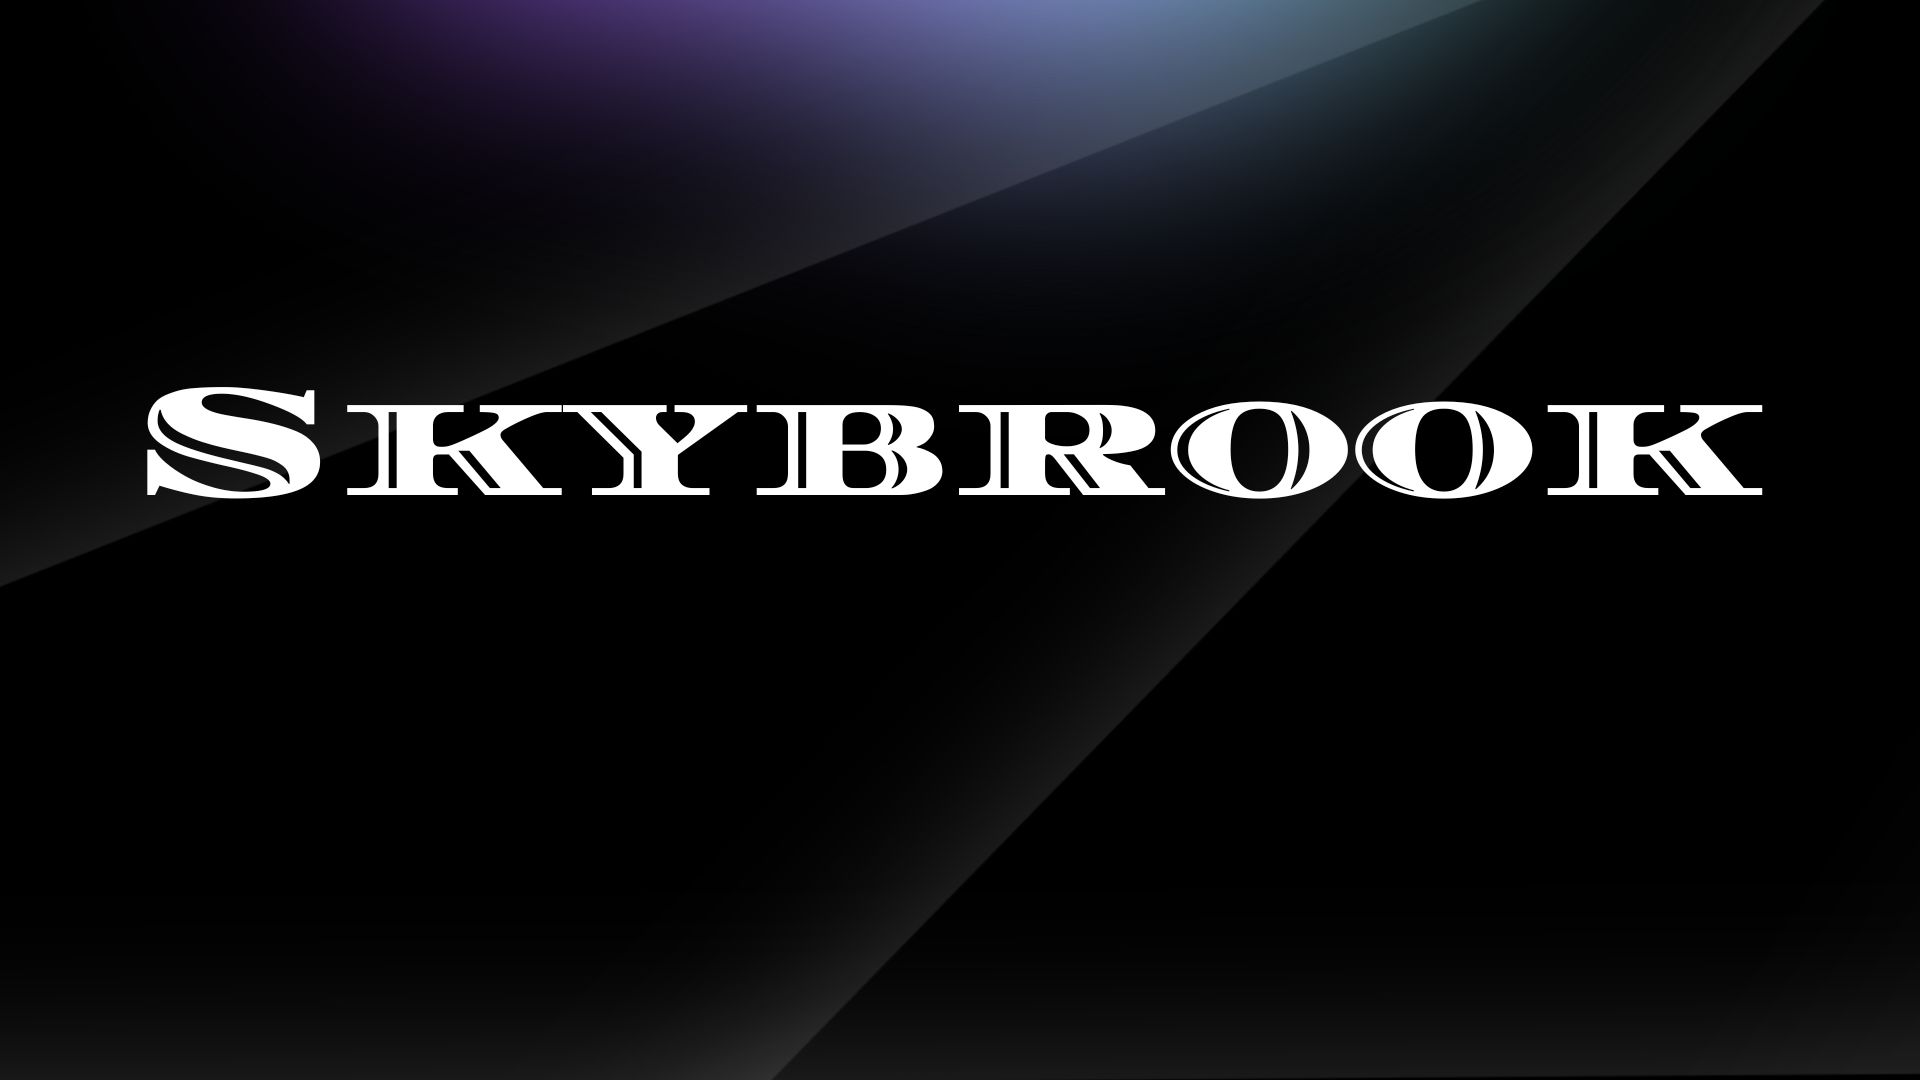 Skybrook #179/1000